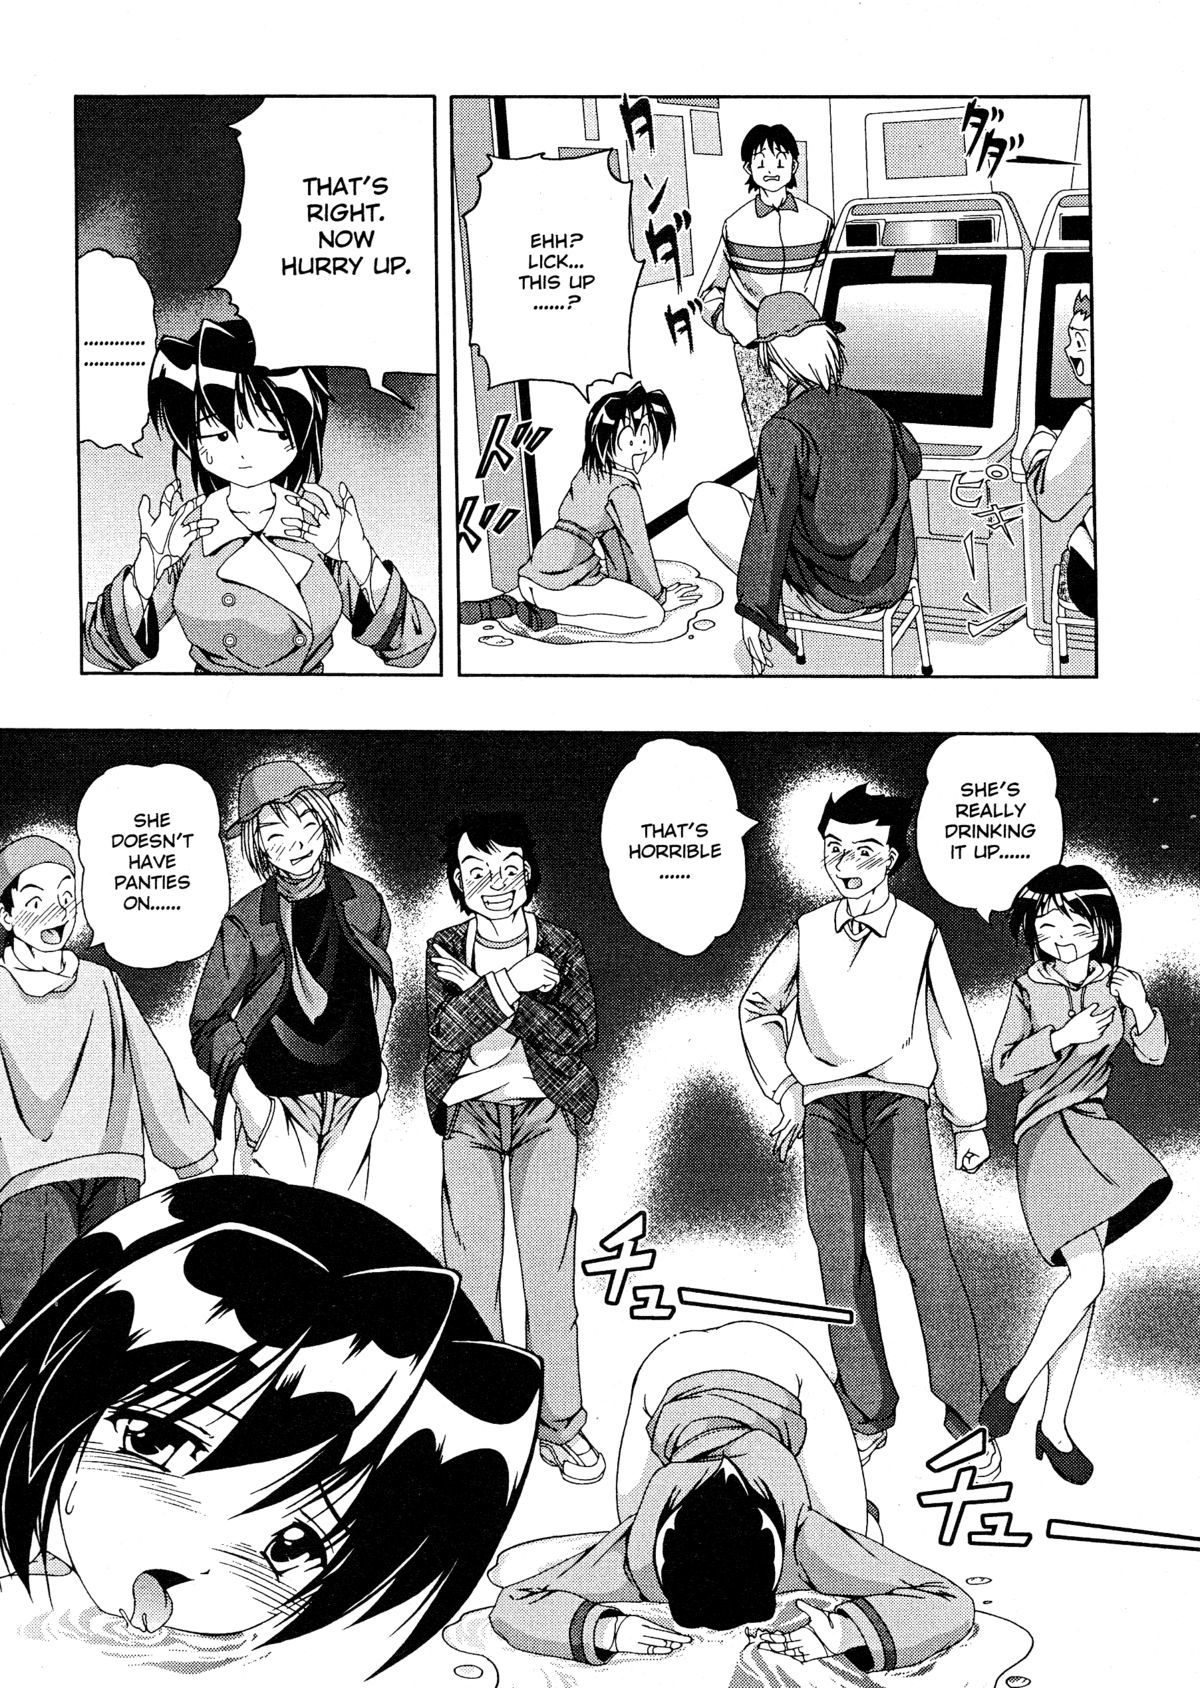 Flashbang!Hi-res 26 hentai manga